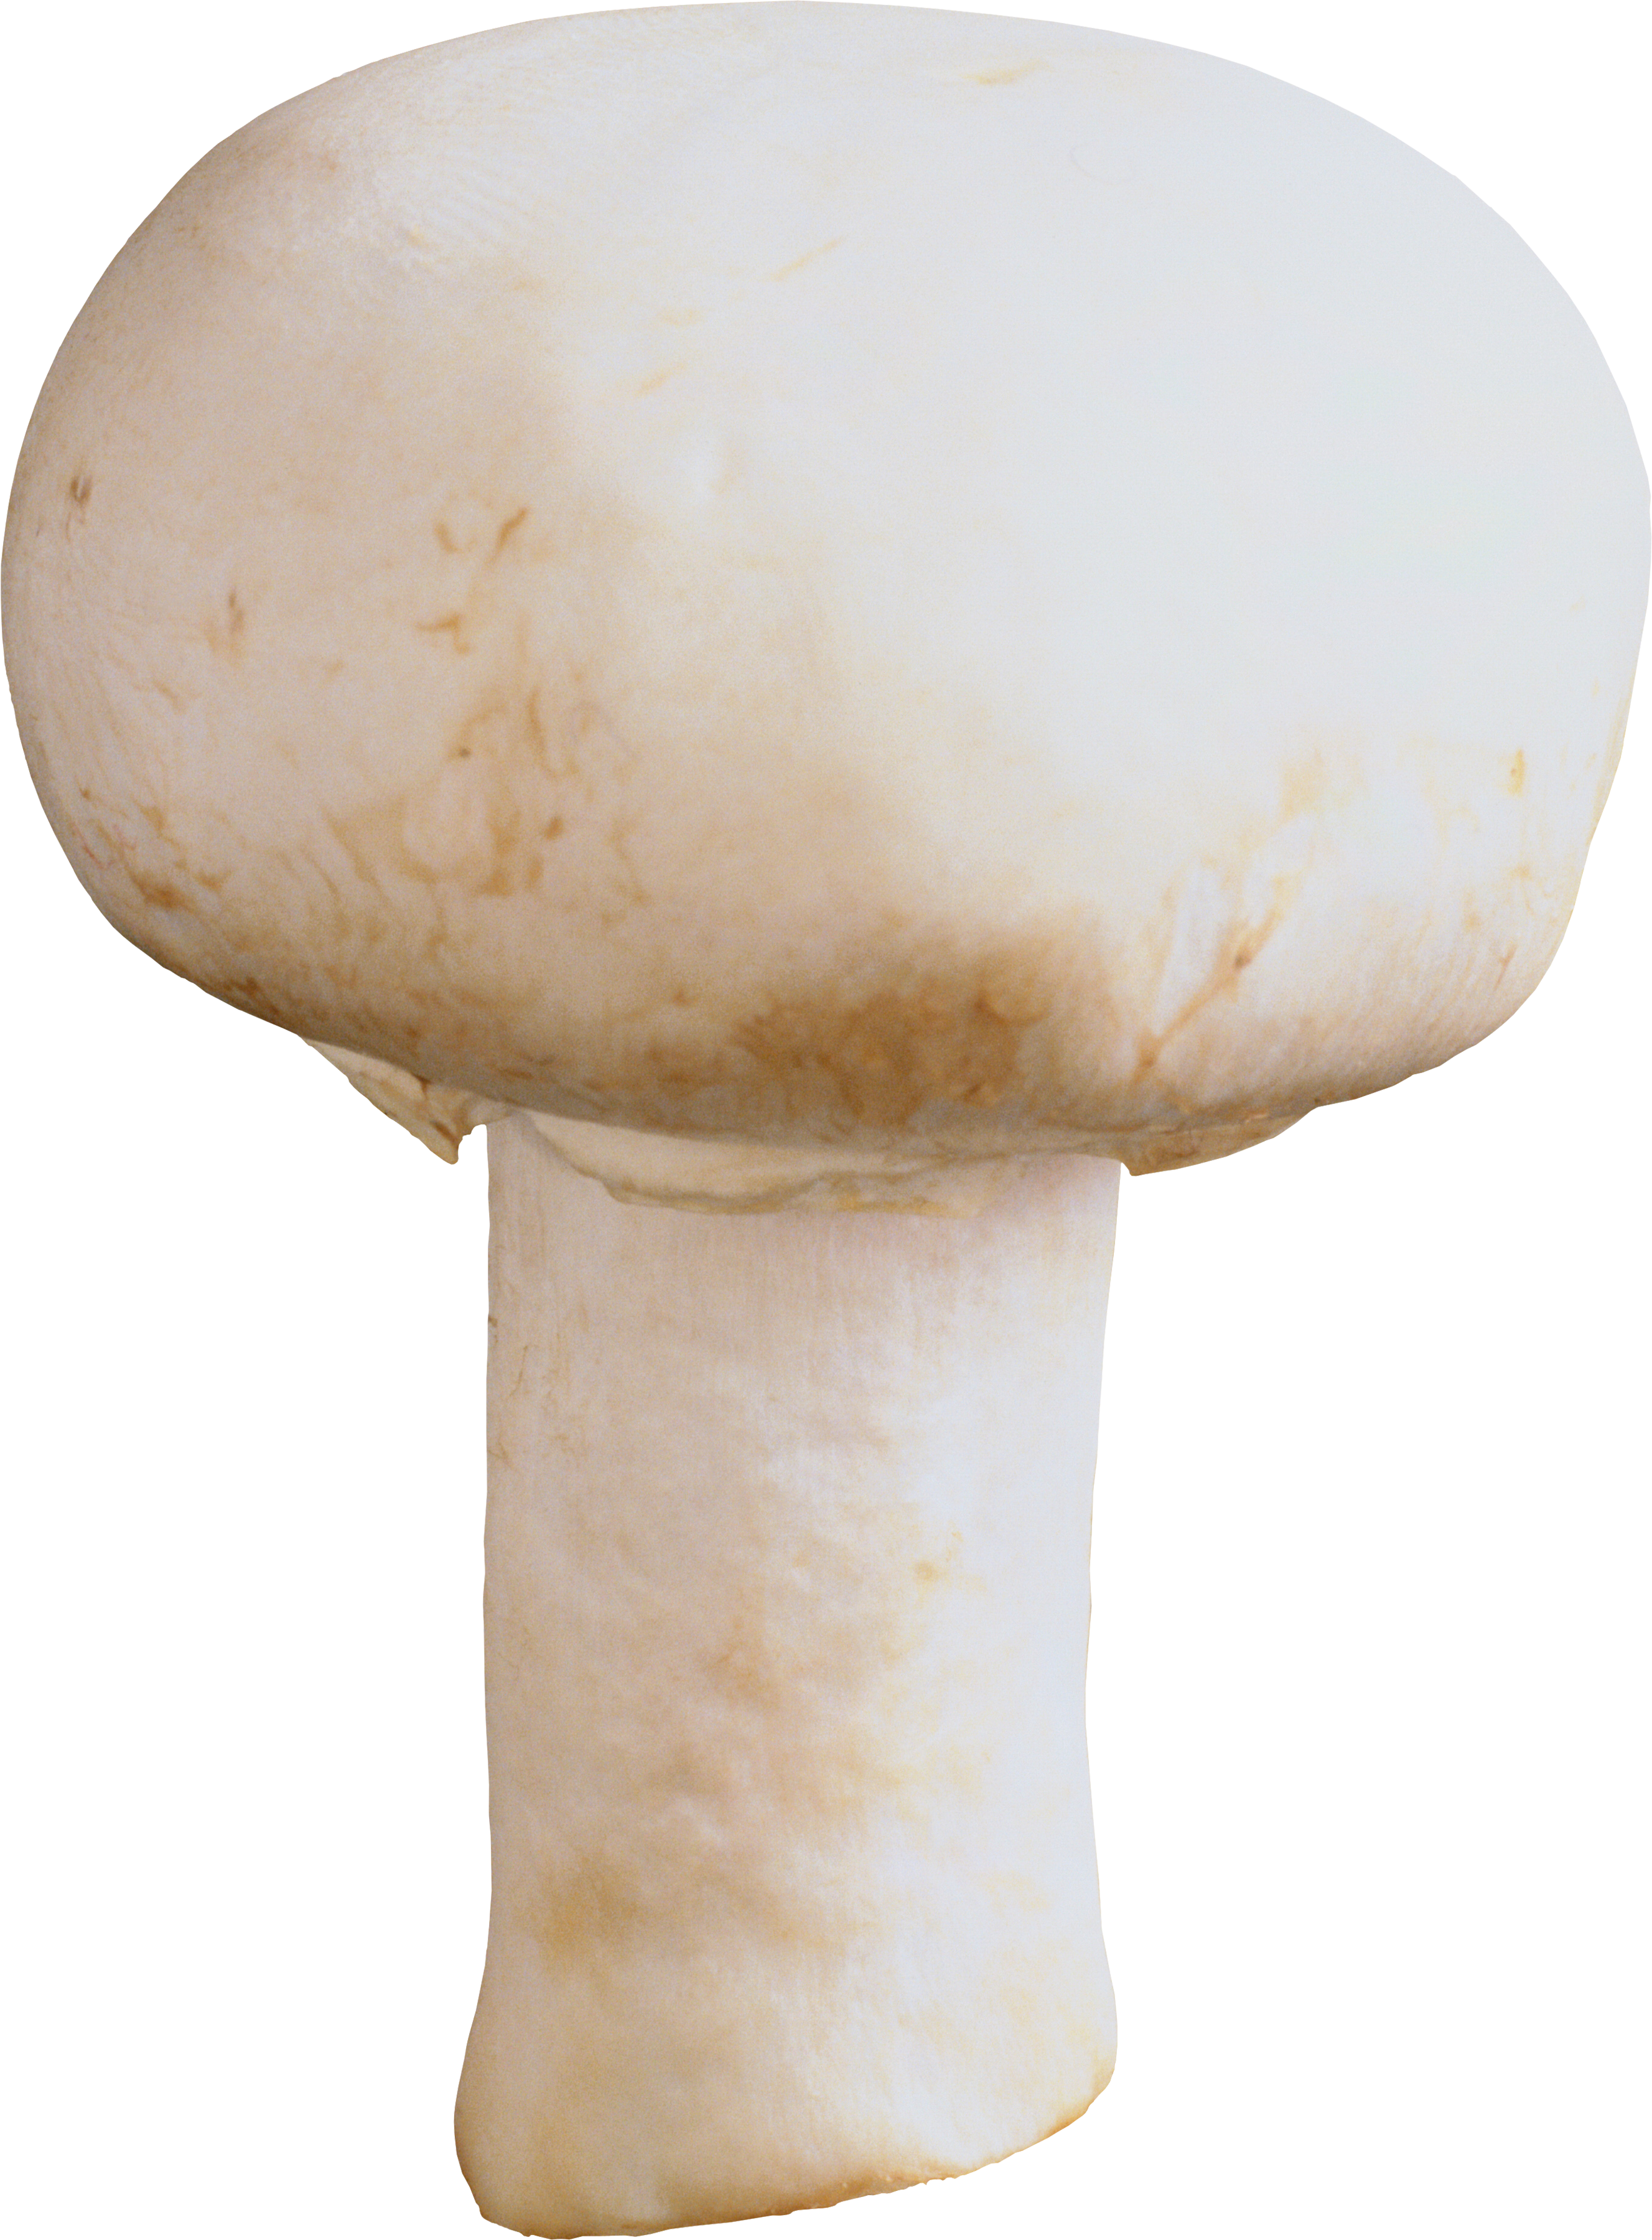 mushroom image white photo #9075